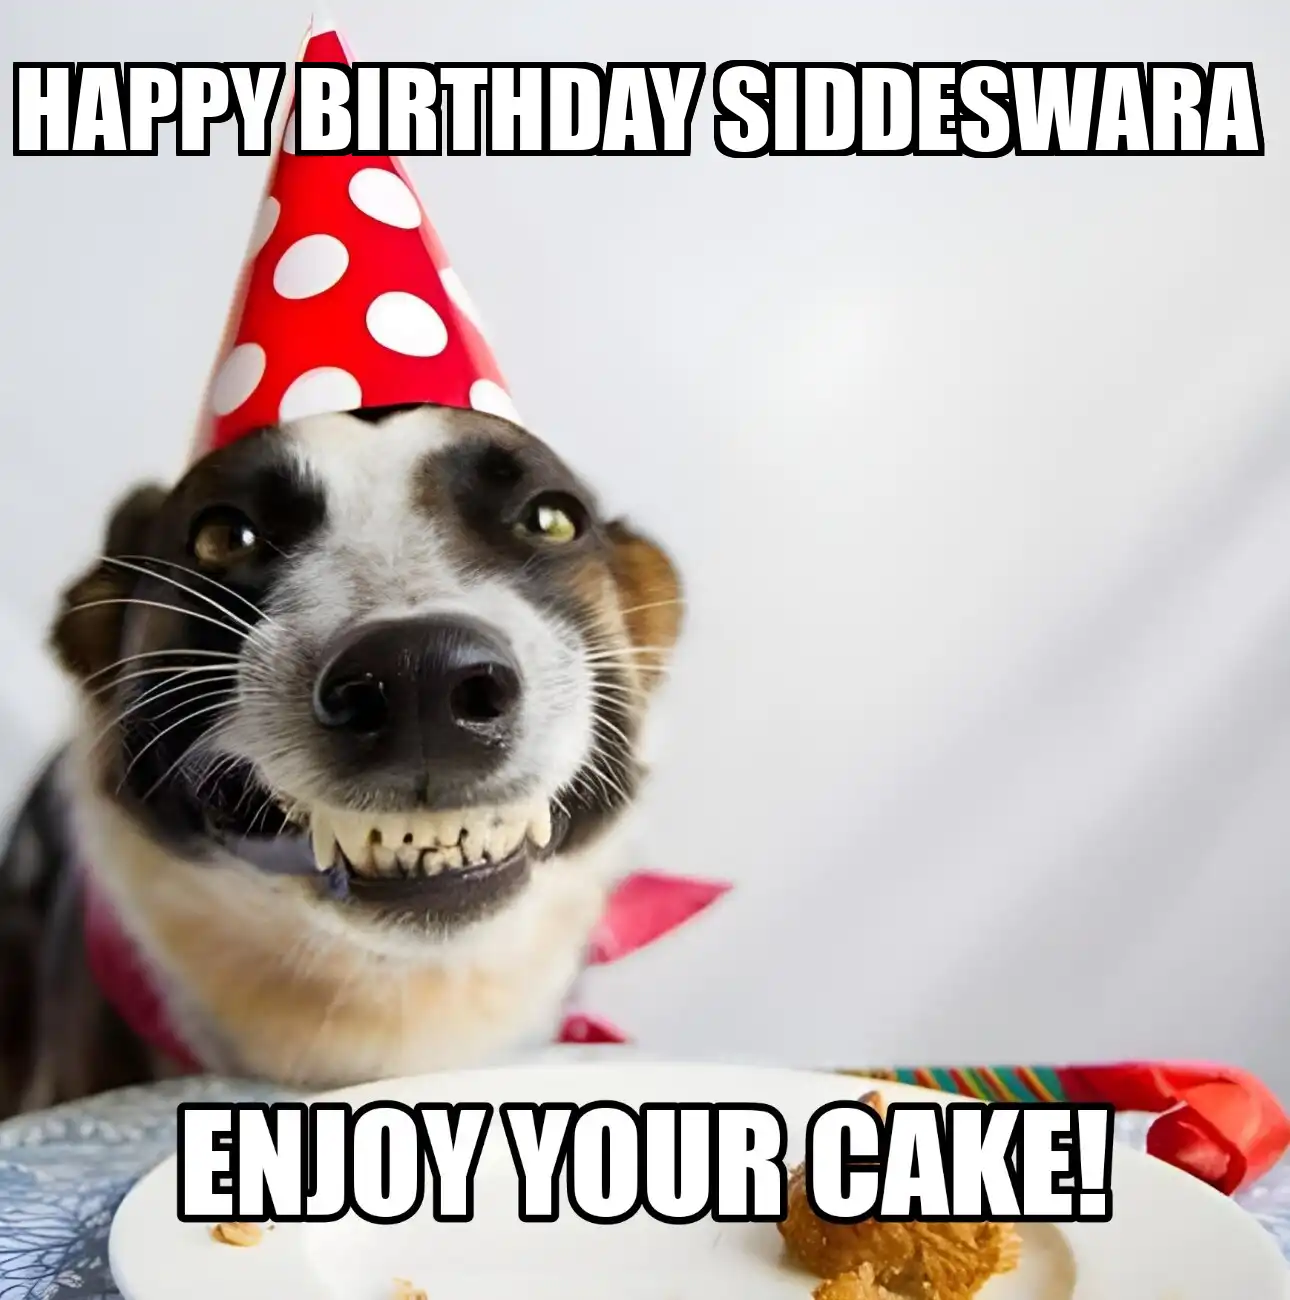 Happy Birthday Siddeswara Enjoy Your Cake Dog Meme